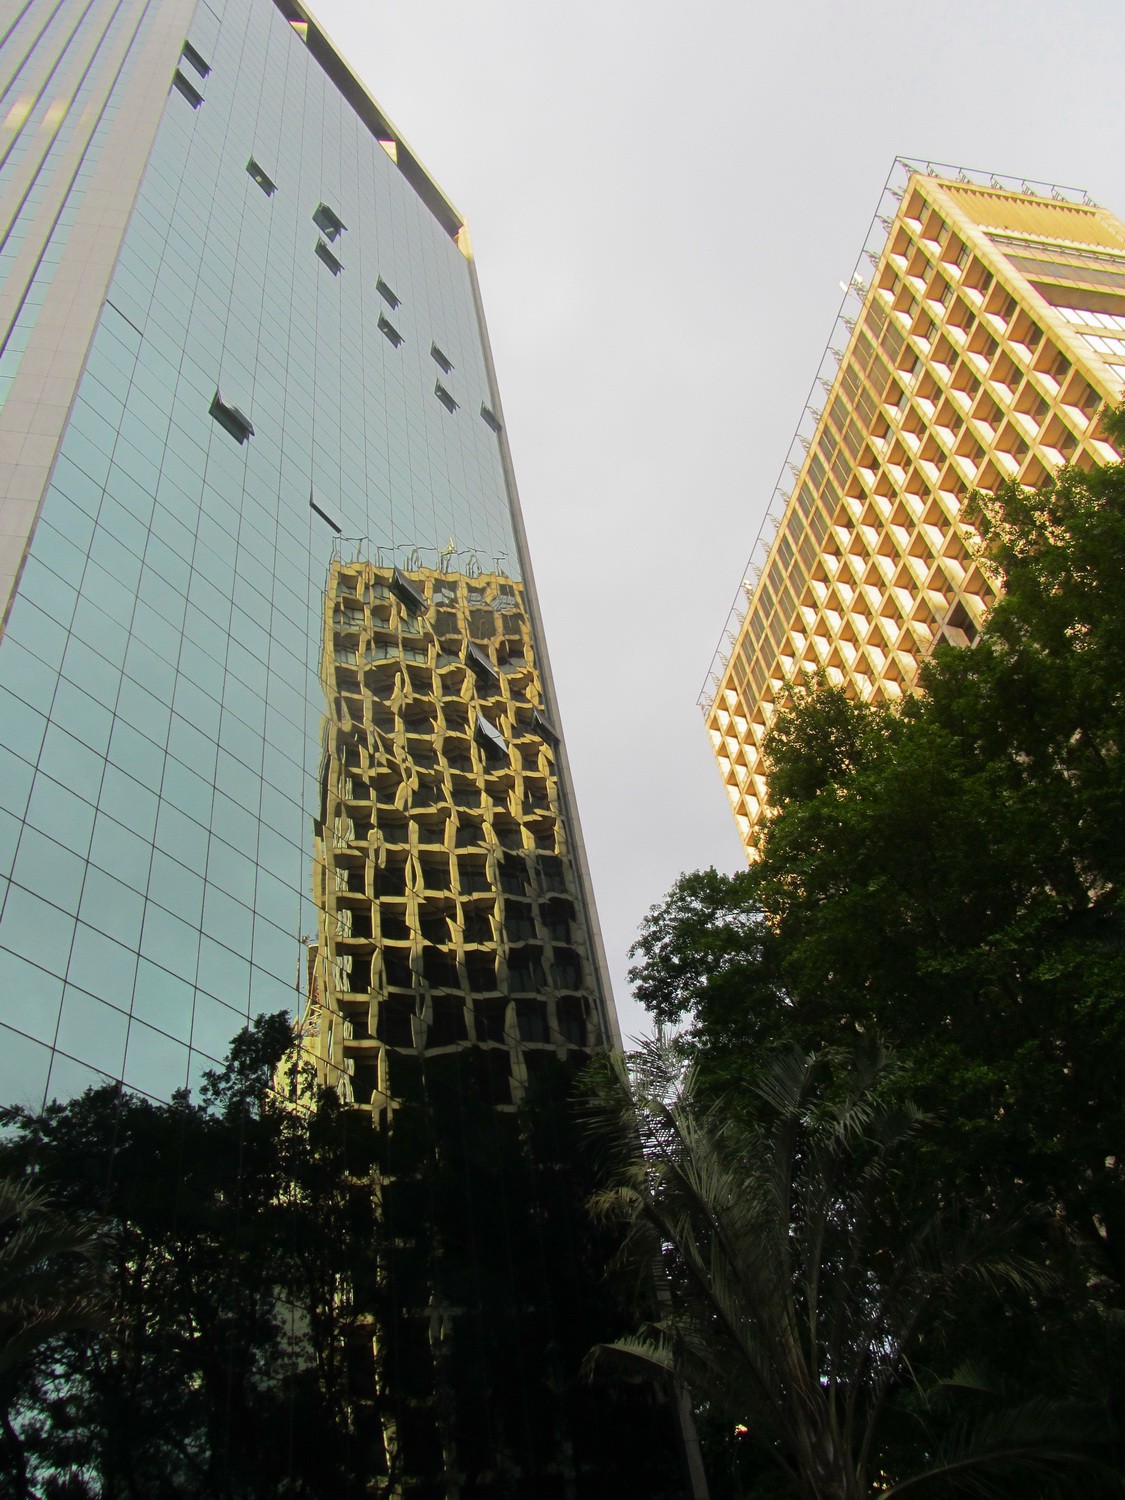 Skyscrapers in the Avenida Paulista